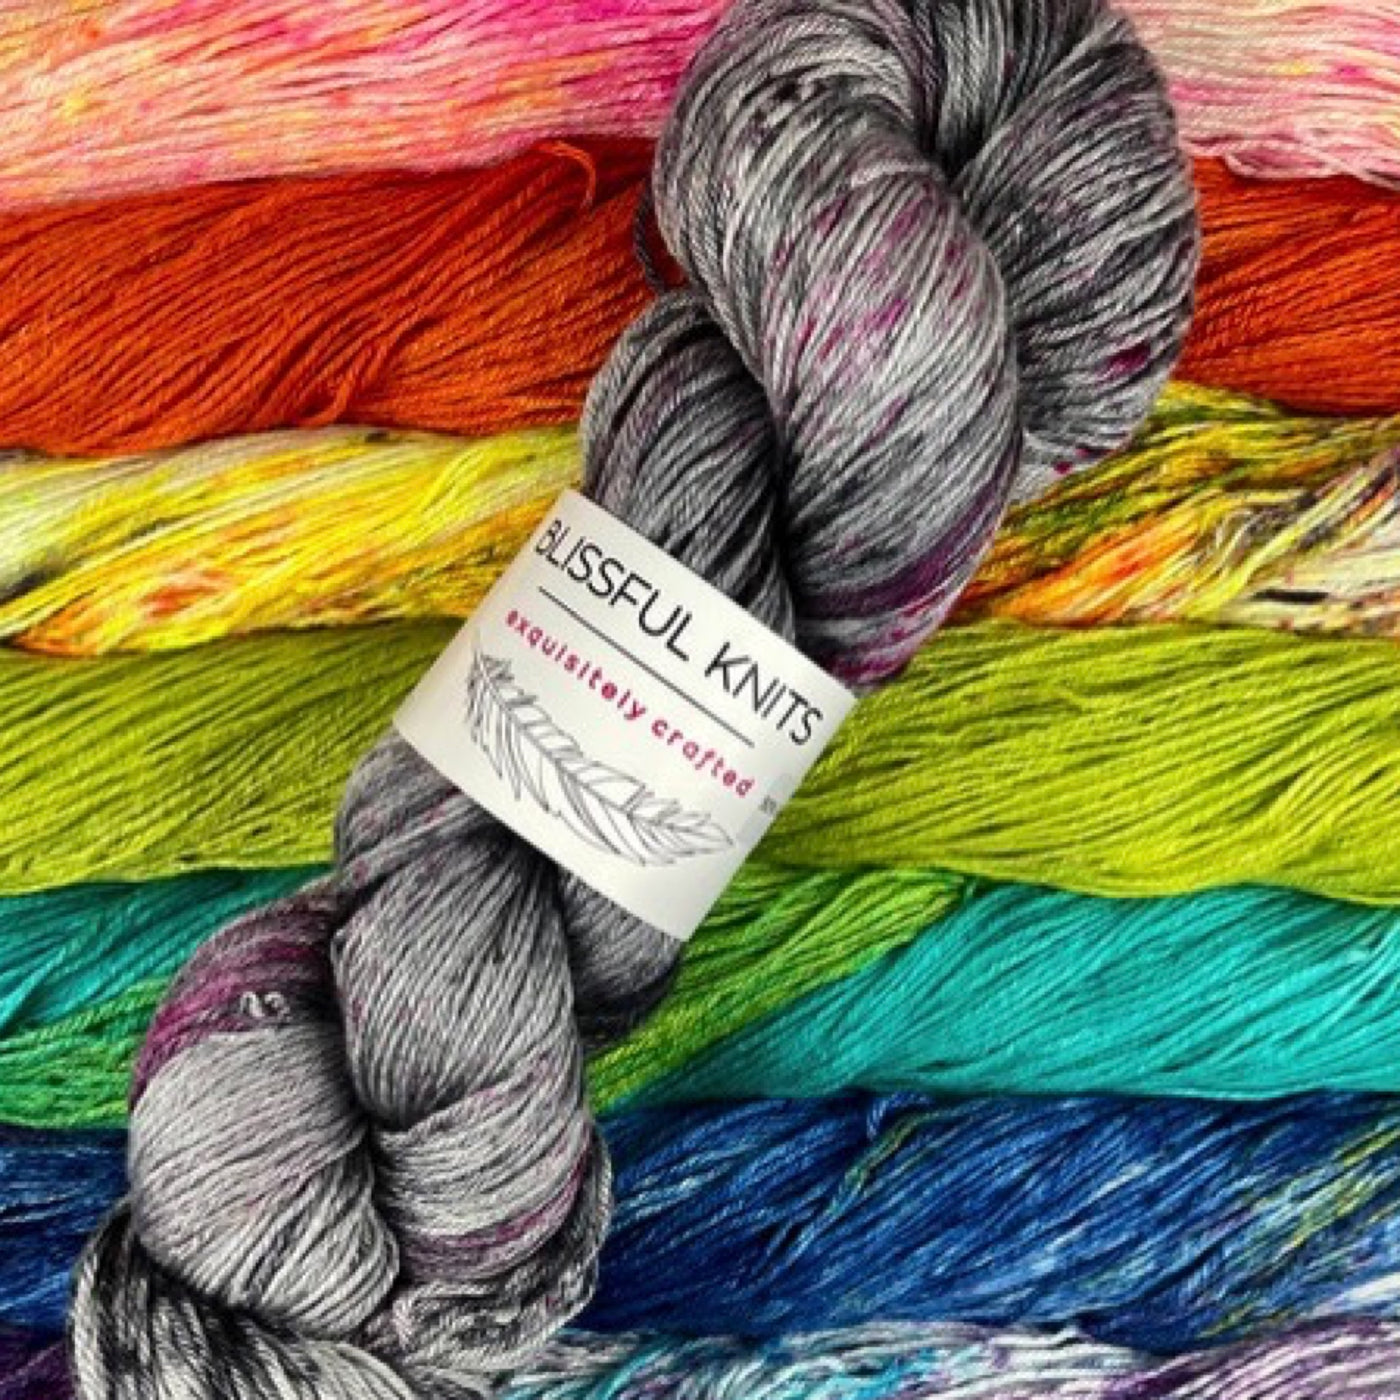 blissful knits yarn